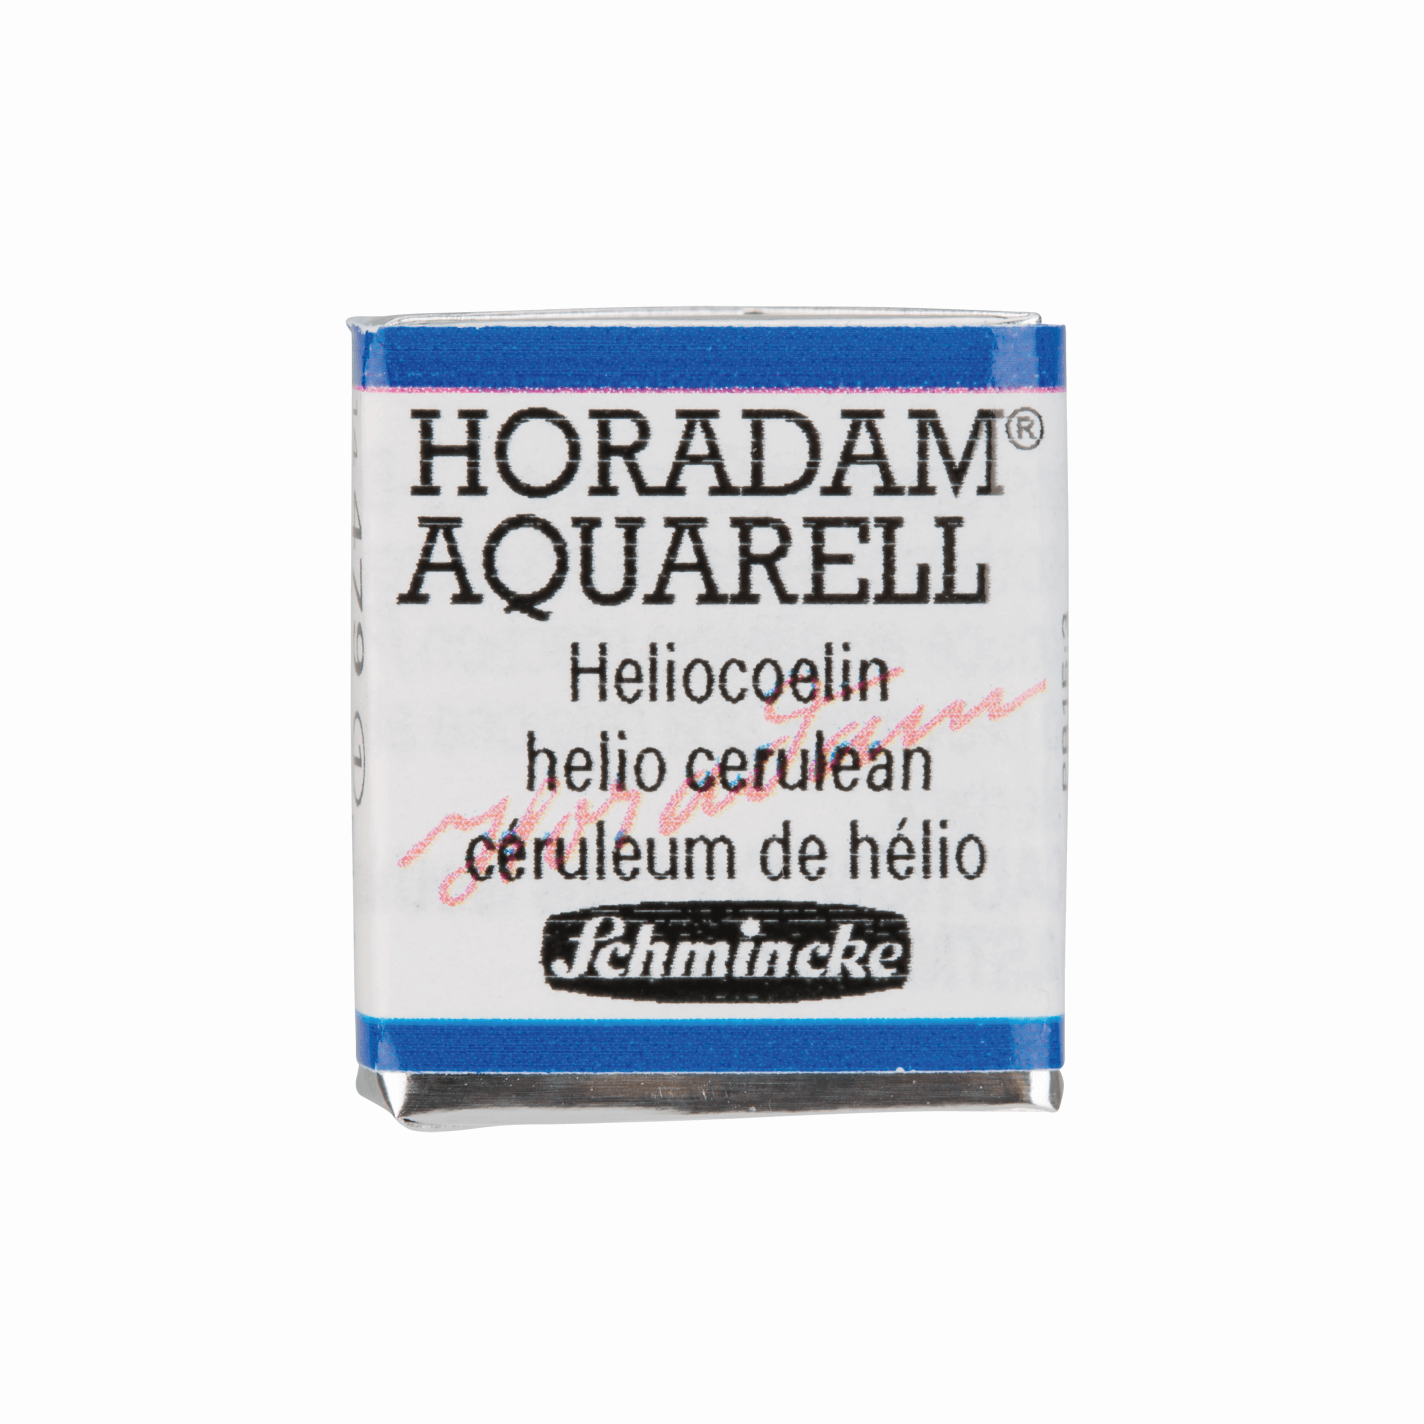 Schmincke Horadam Aquarell pans 1/2 pan Helio Cerulean